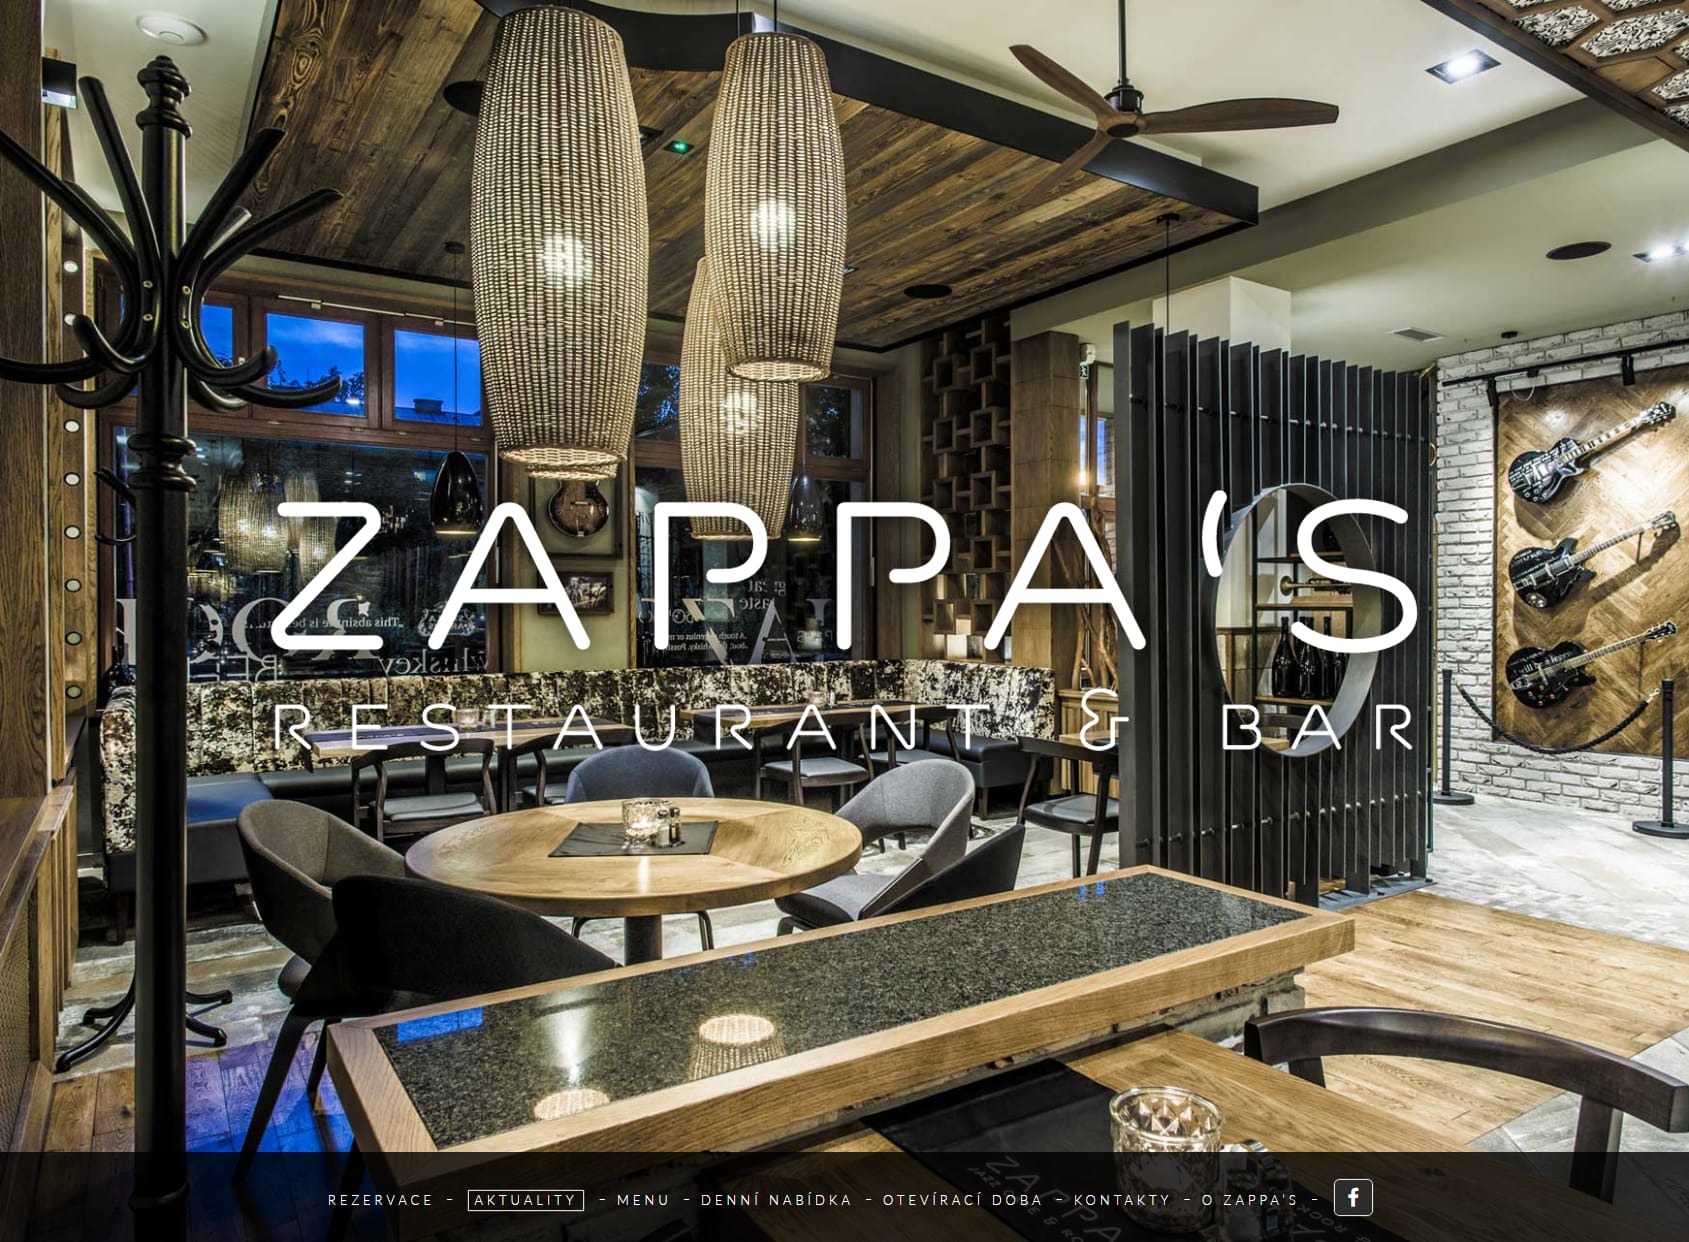 Zappa's restaurant